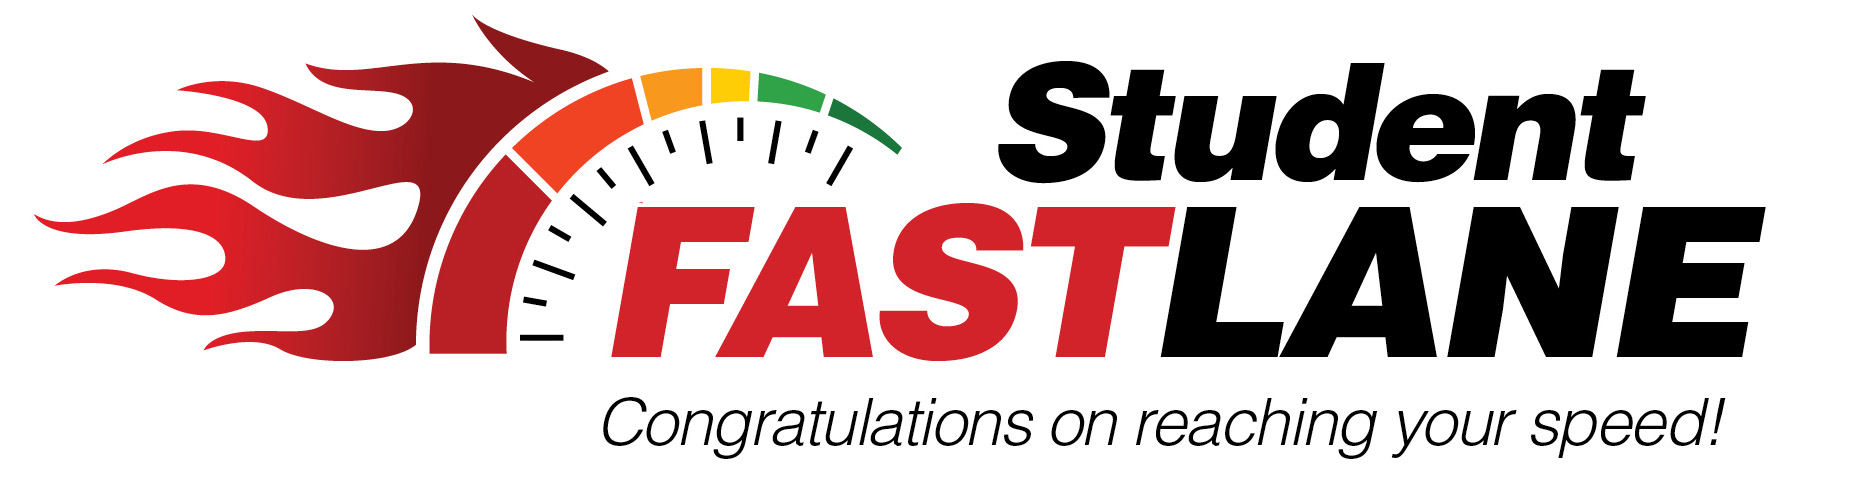 Student Fast Lane logo